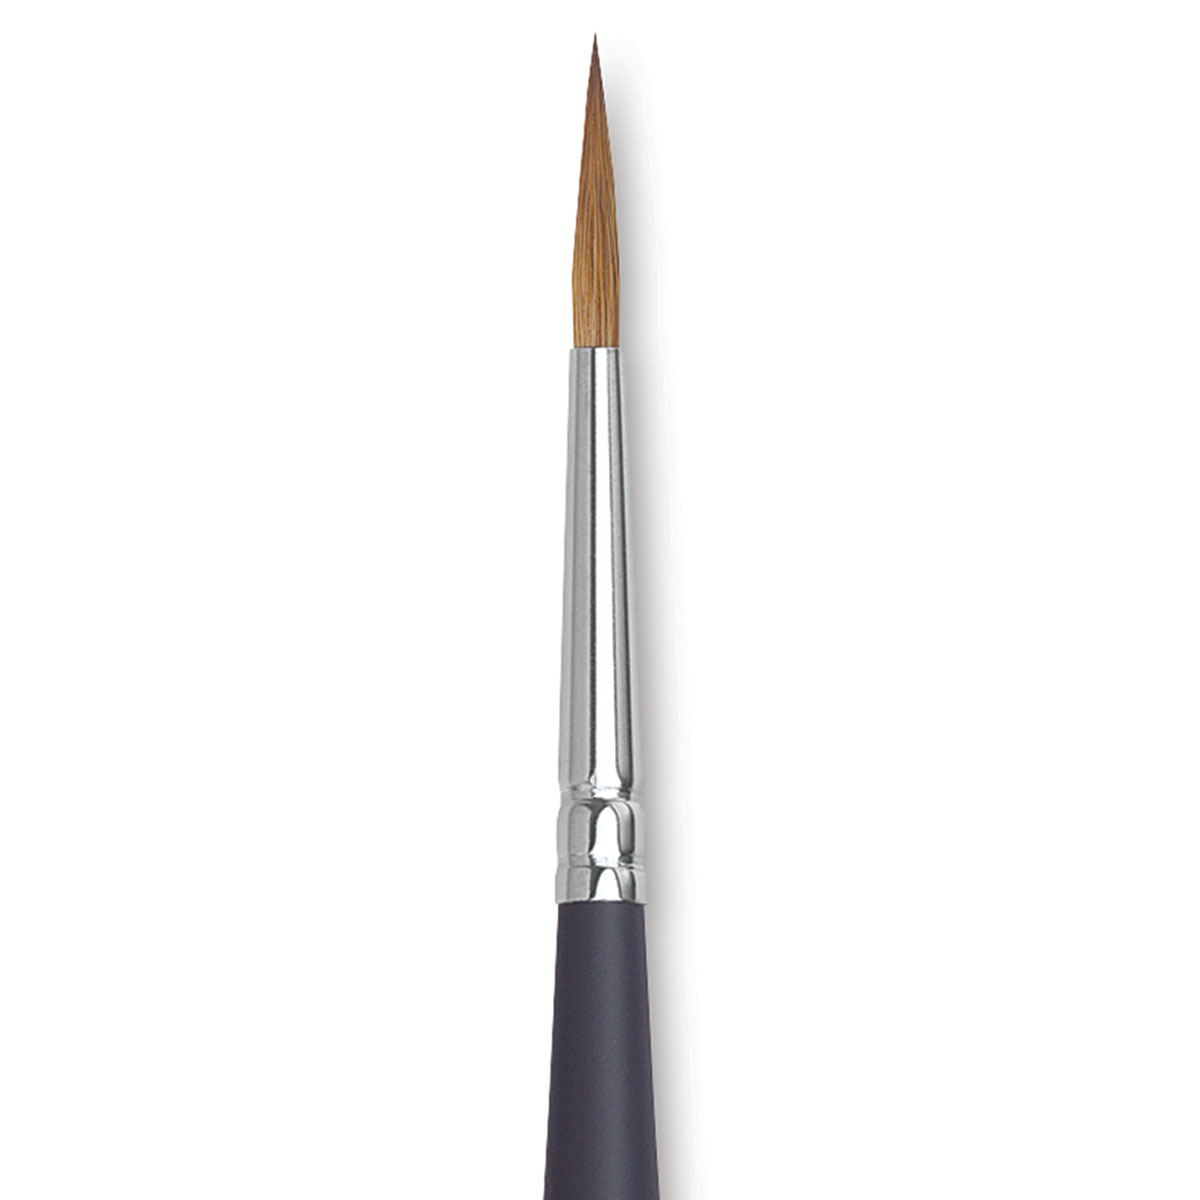 Kolinsky sable brush long oval size 6 with gunmetal handle